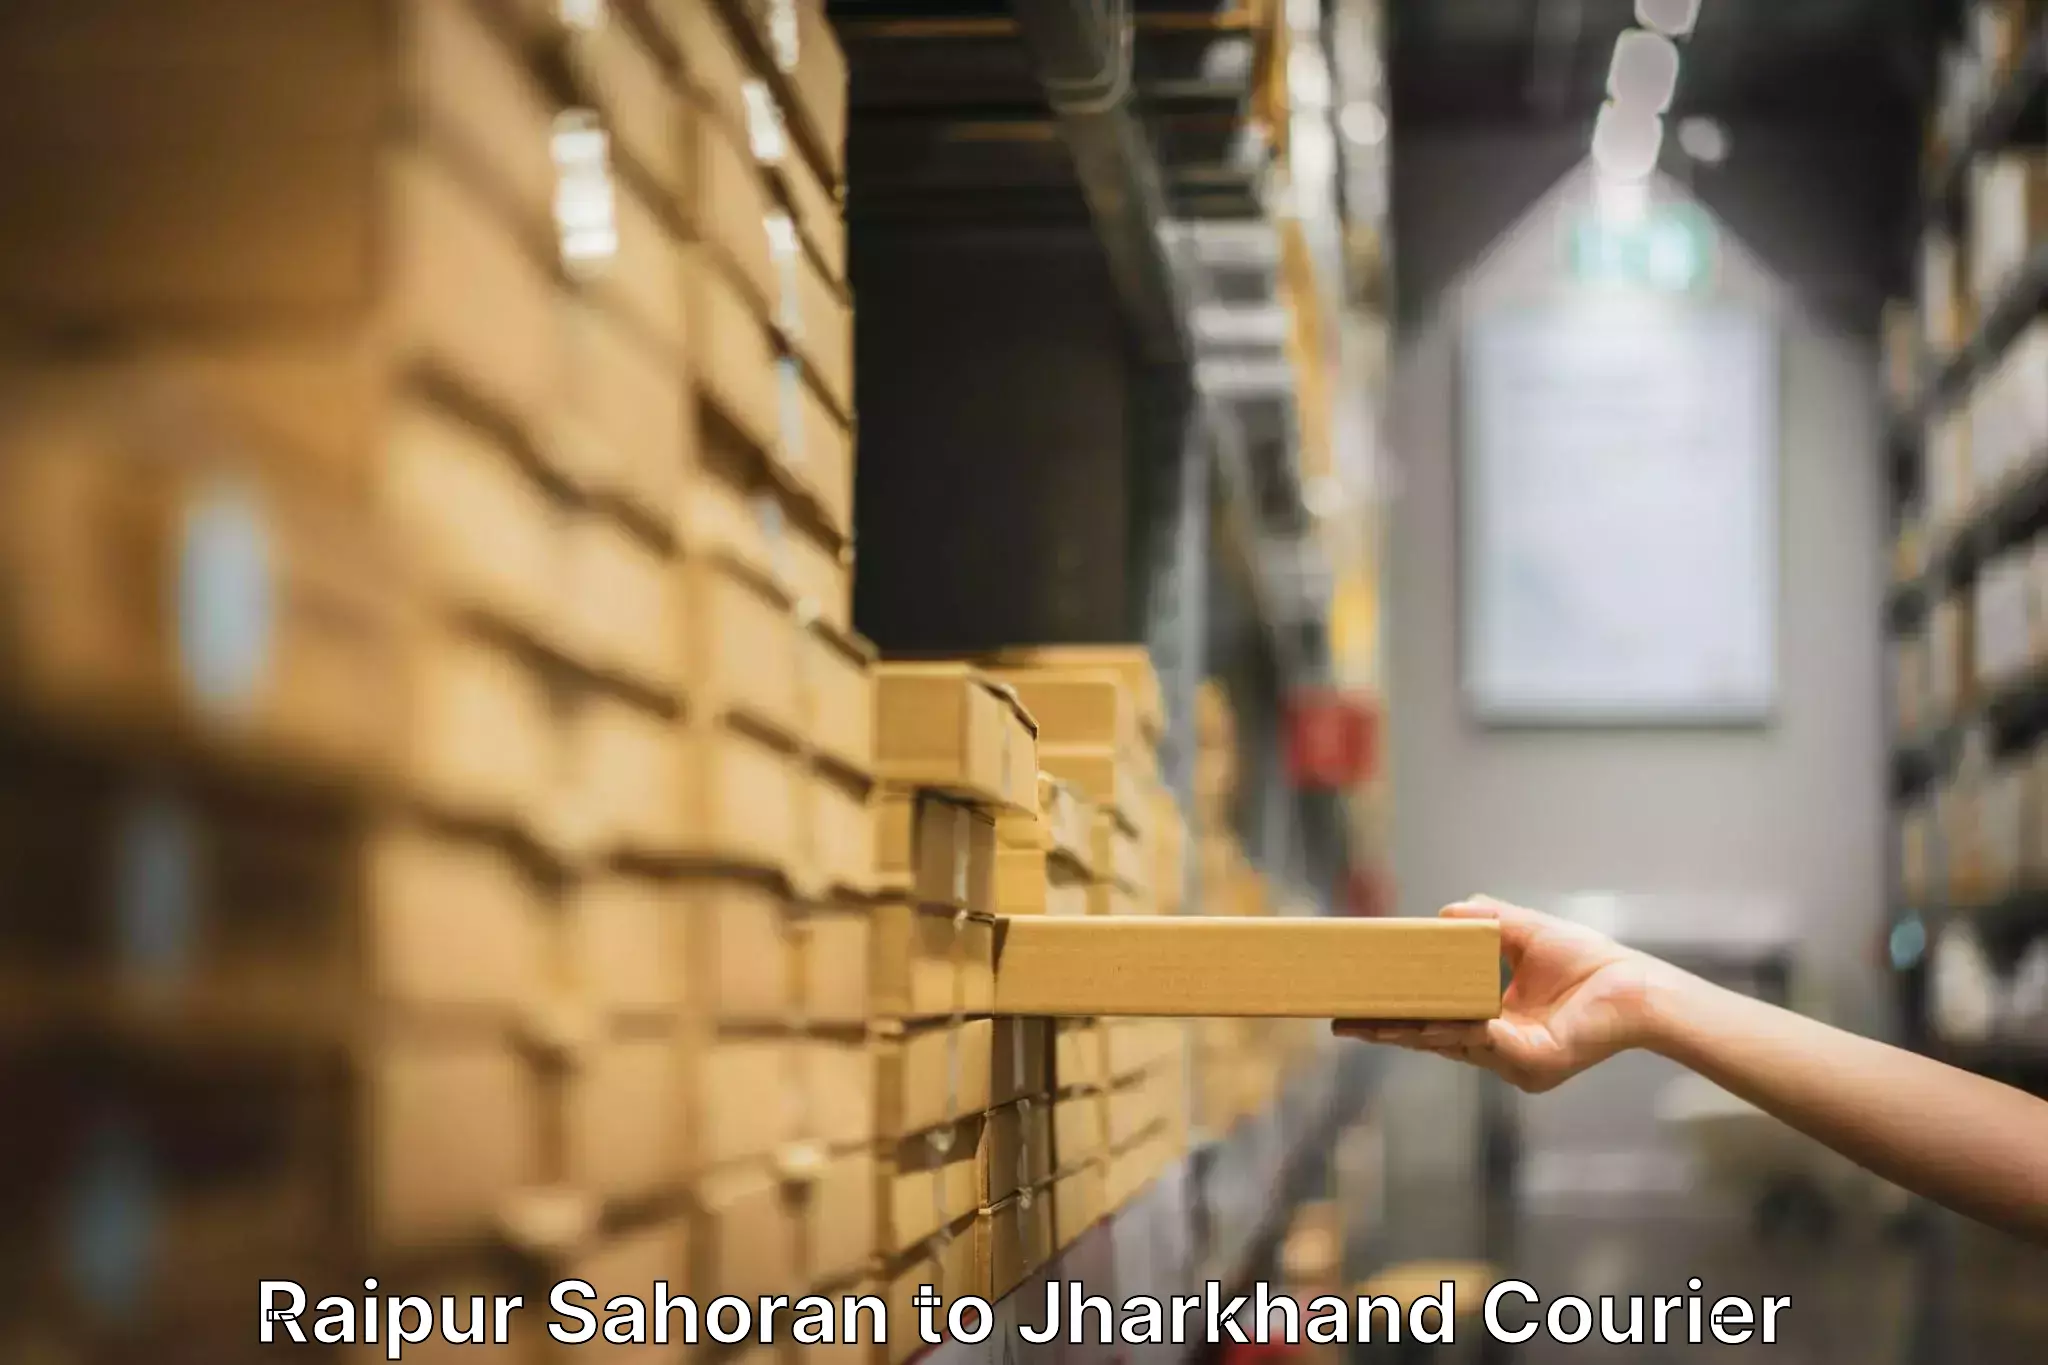 Professional furniture movers Raipur Sahoran to Jharkhand